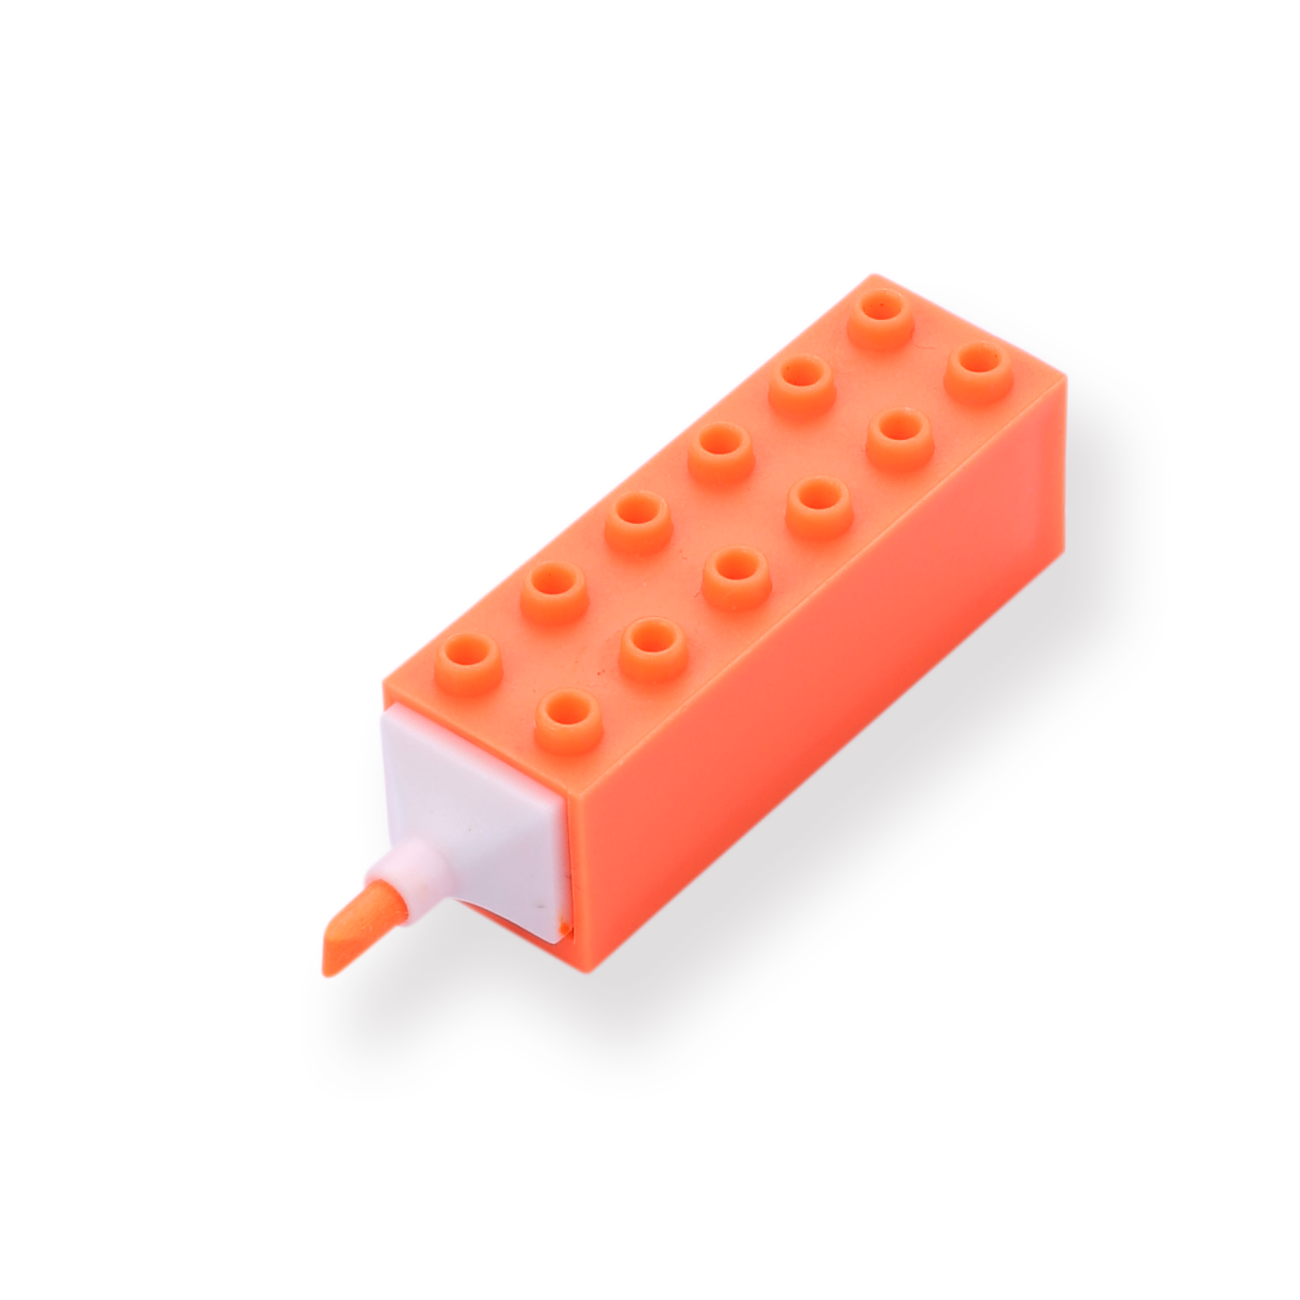 Building Block Highlighter - Orange - Stationery Pal